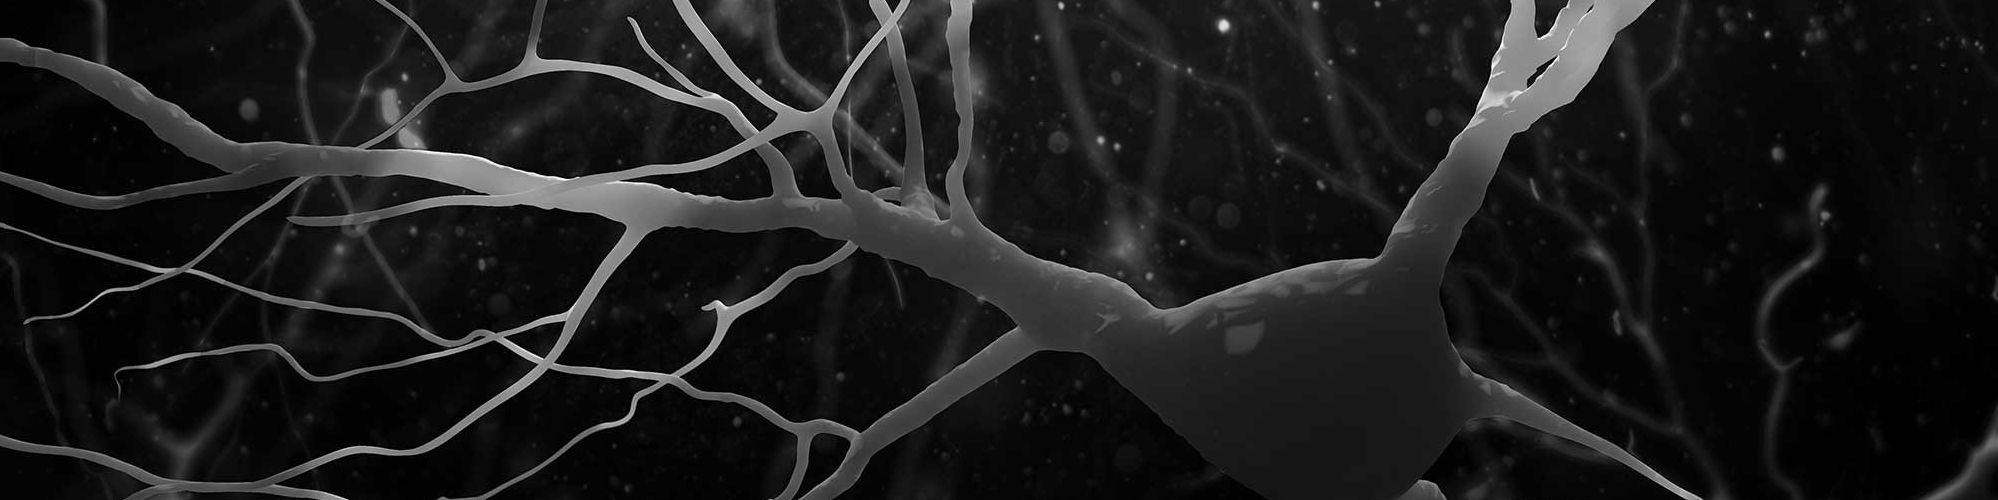 3D Illustration of human nerve cells structure.